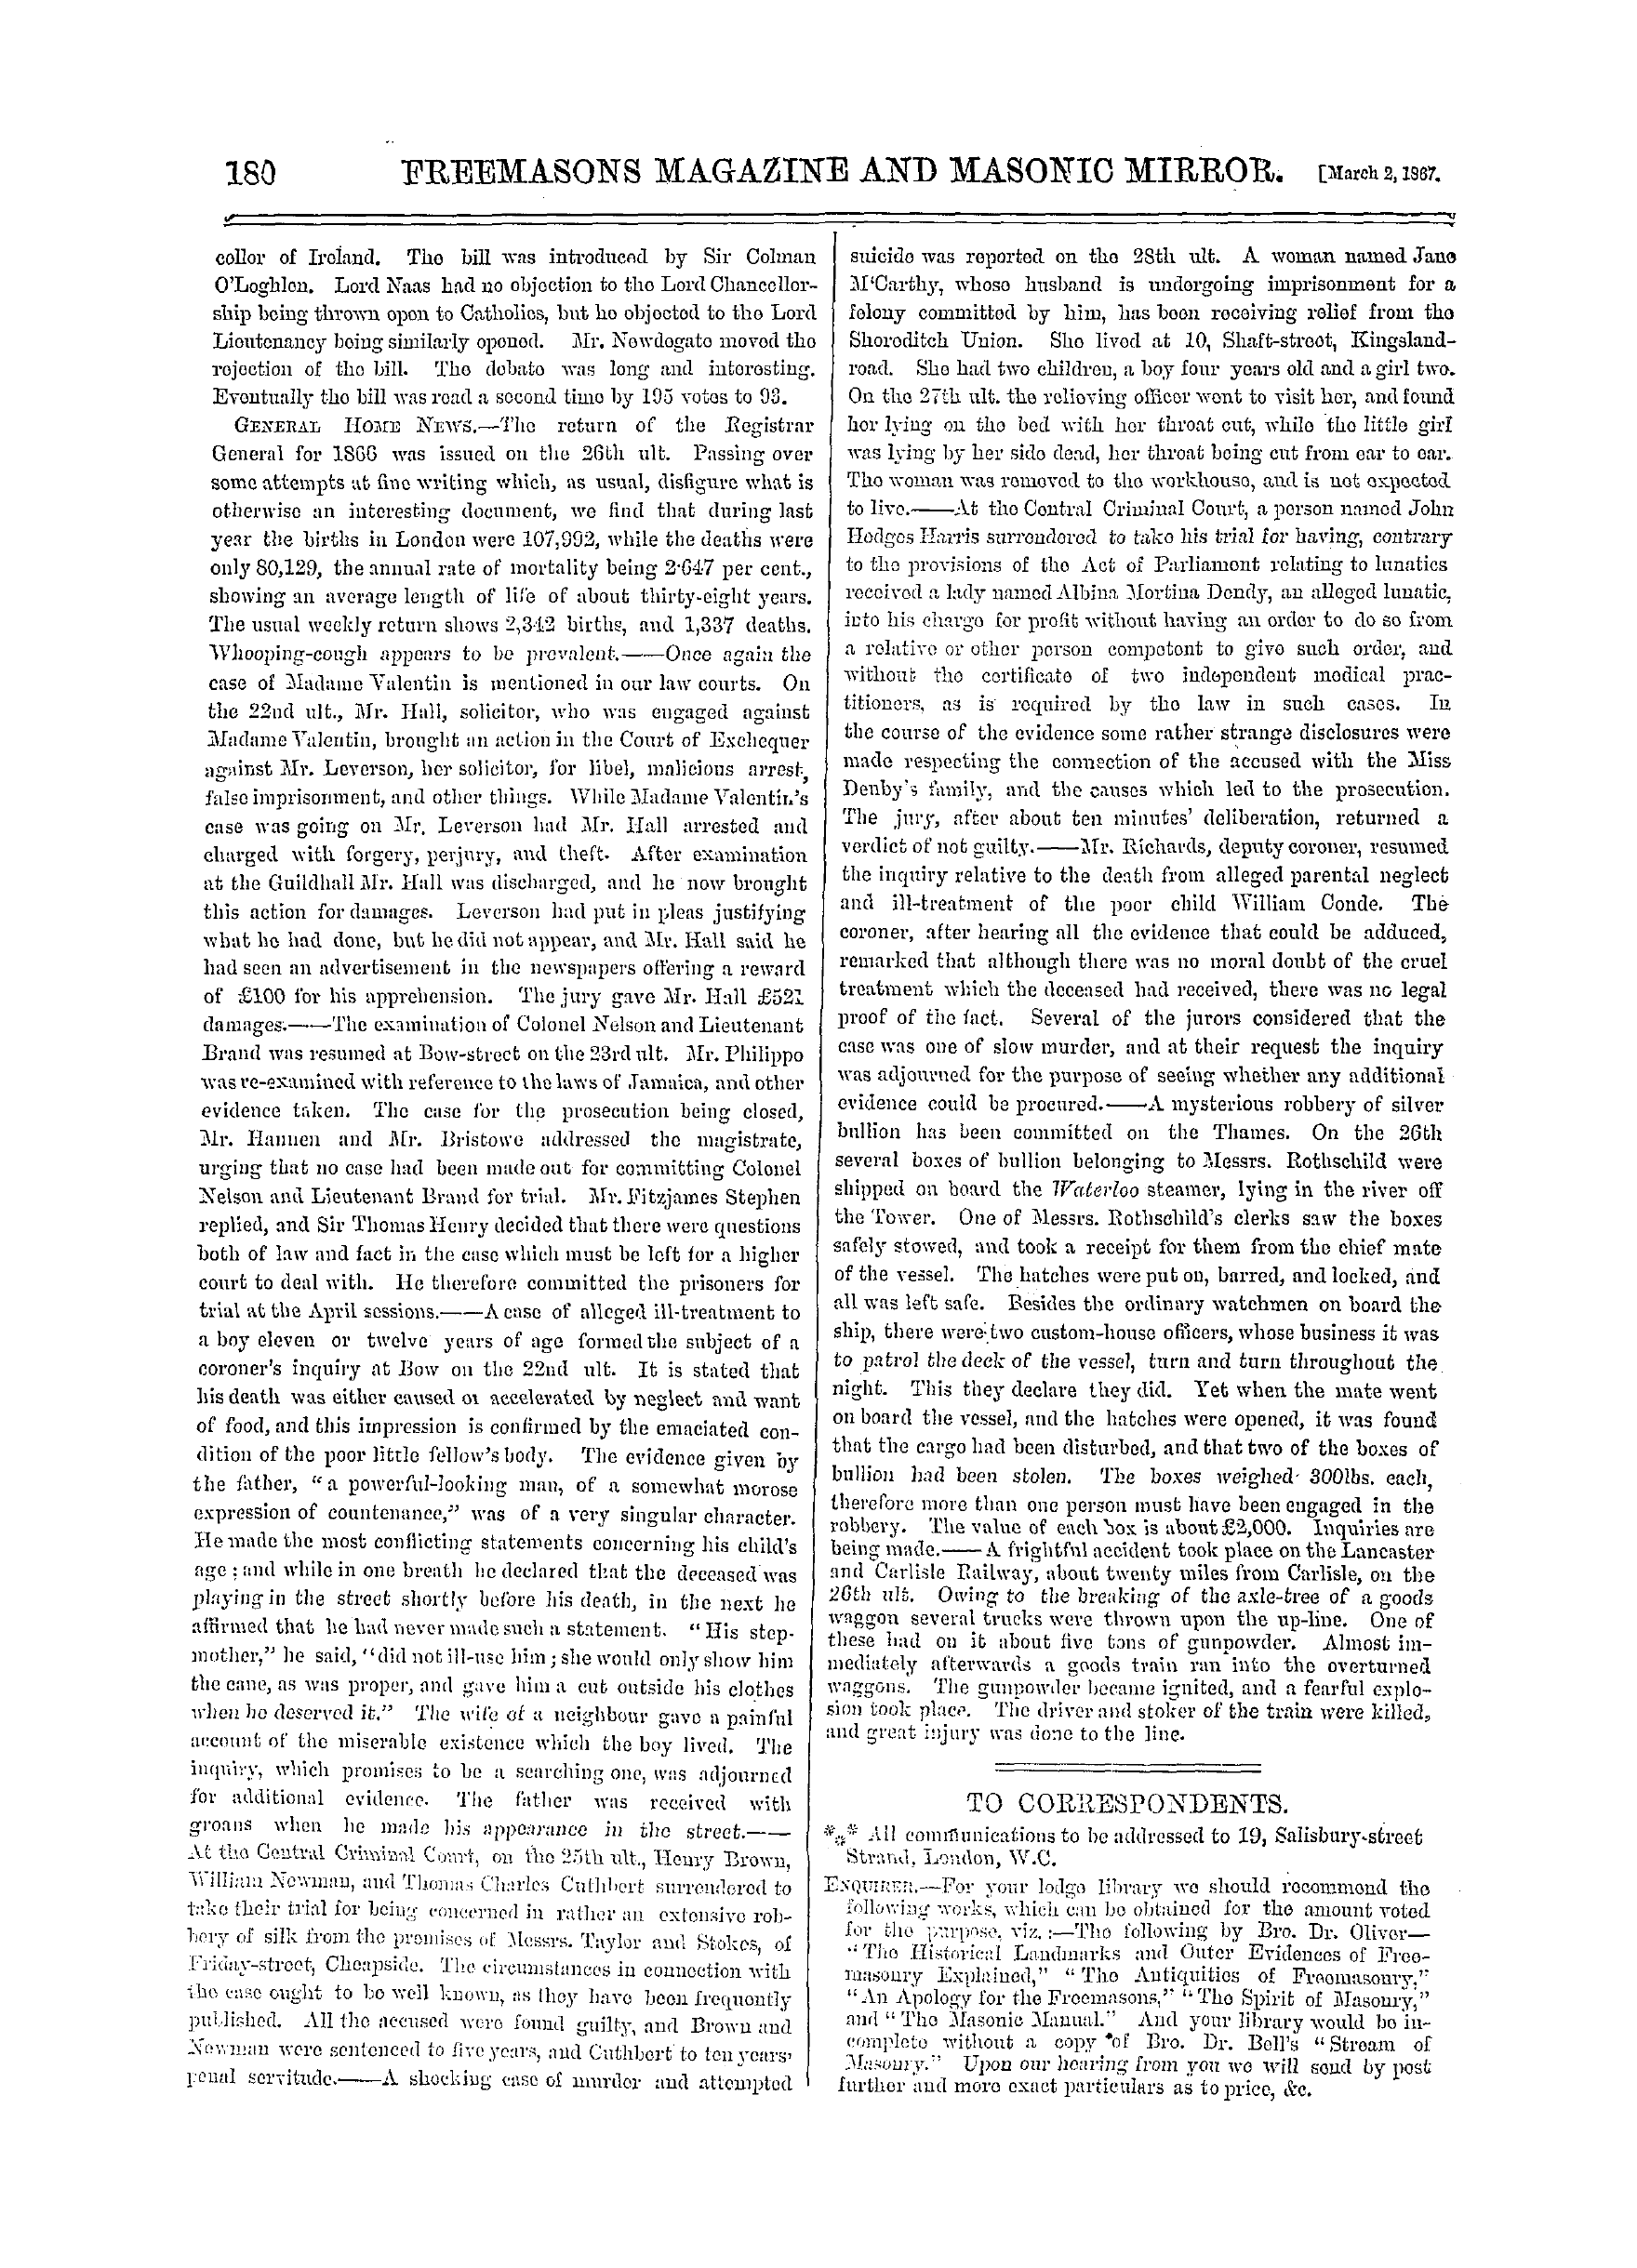 The Freemasons' Monthly Magazine: 1867-03-02 - The Week.